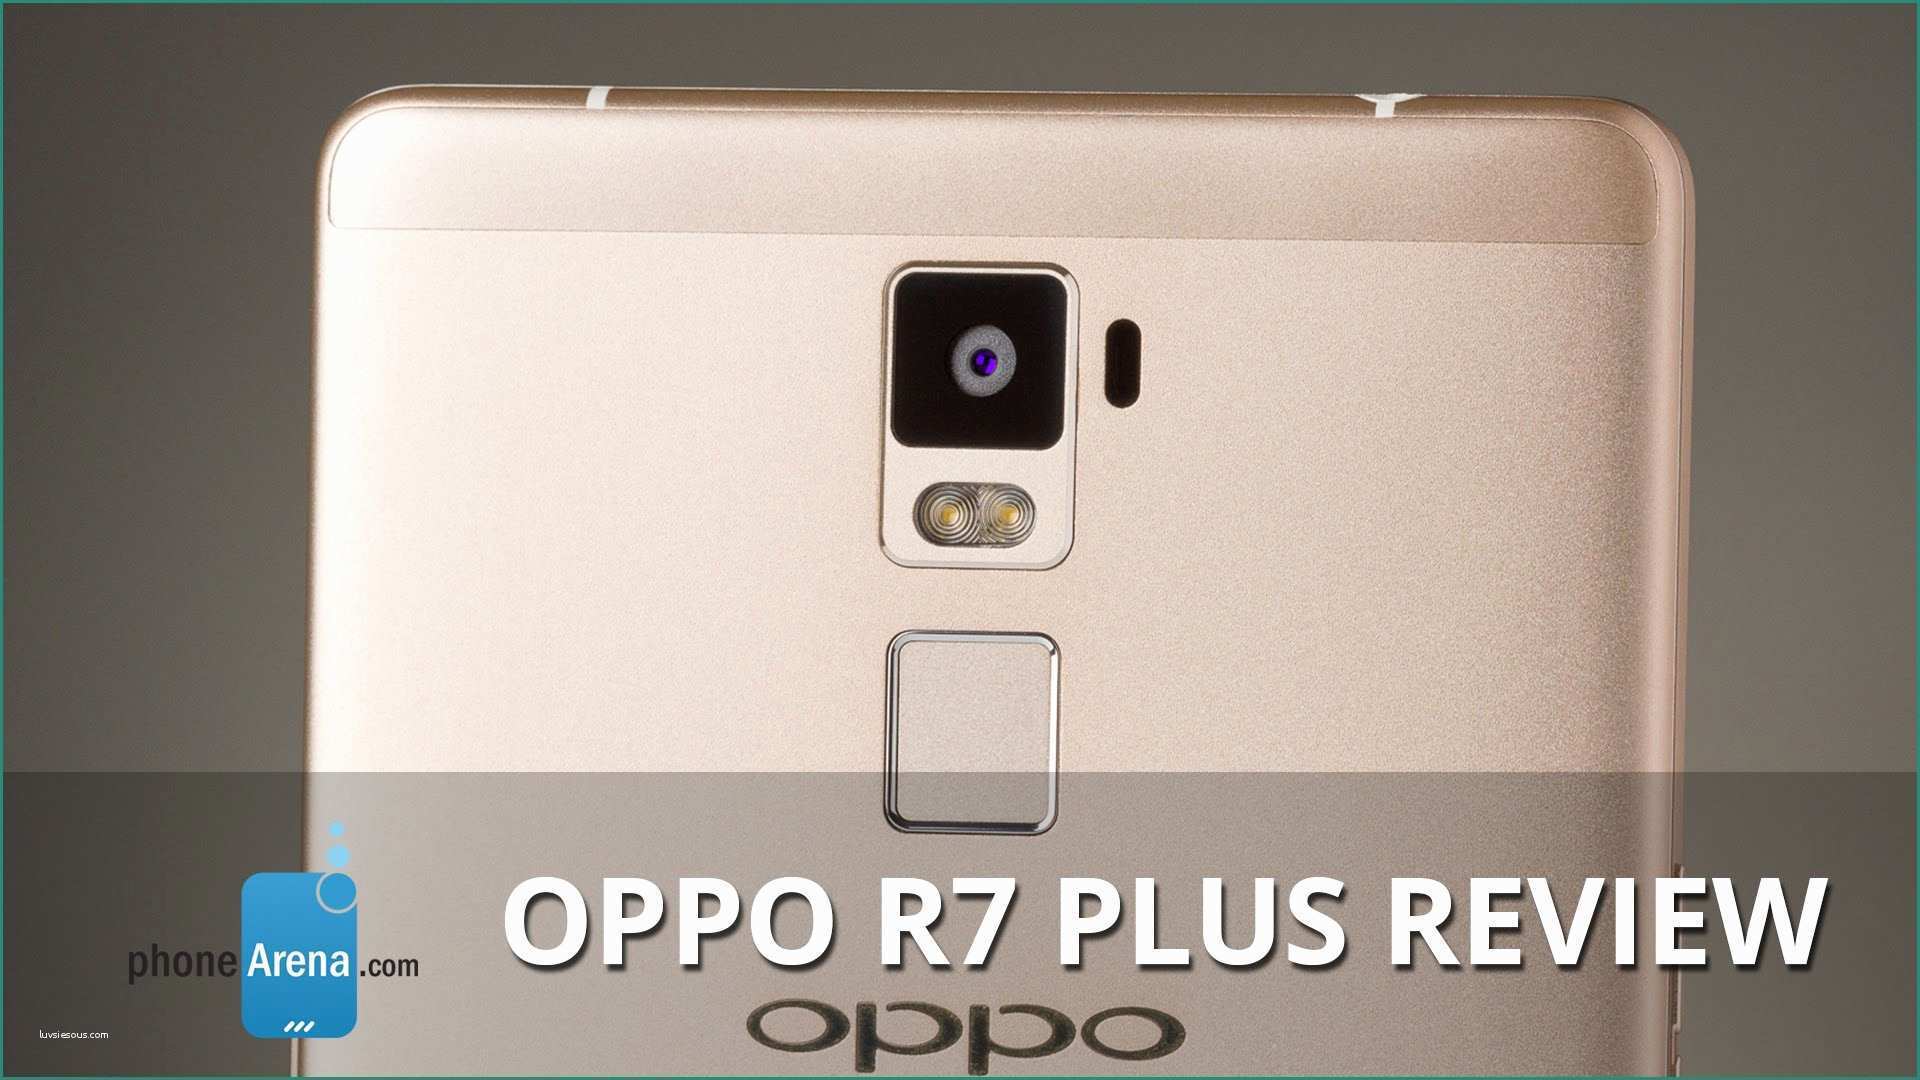 Case Mobili Moderne E Oppo R7 Plus Review